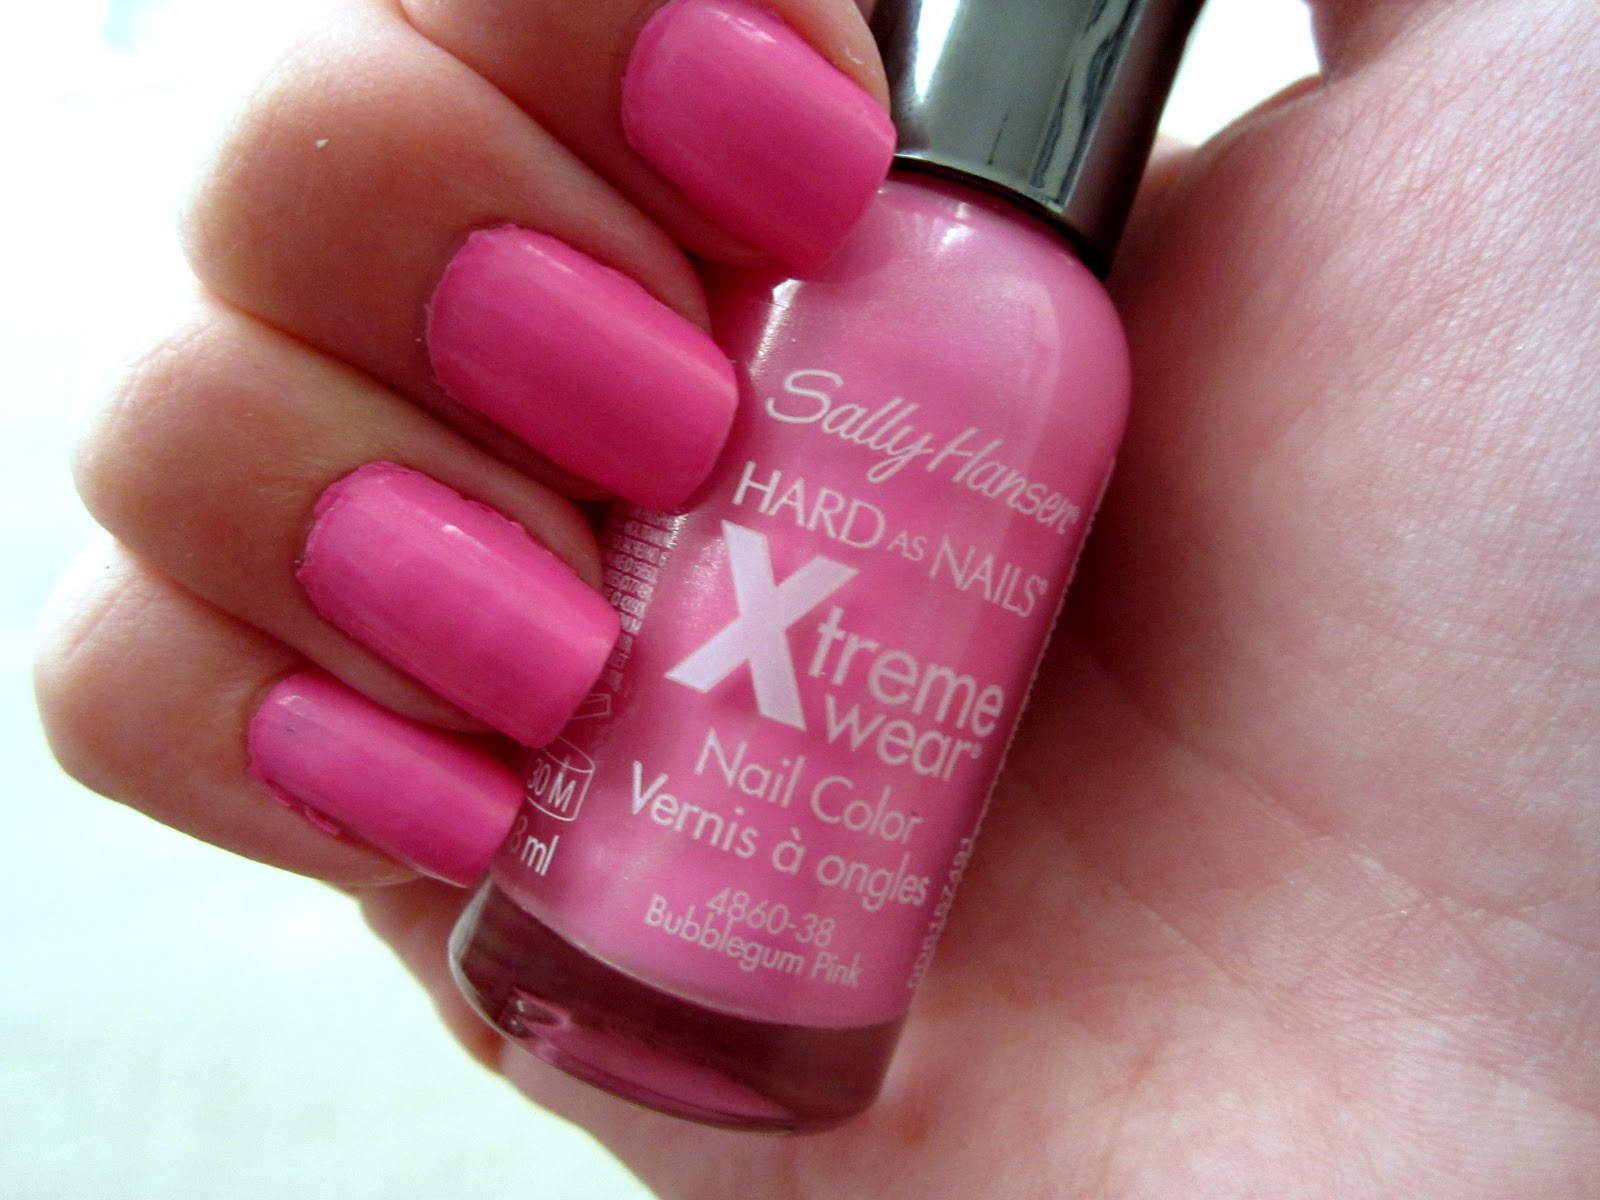 Happy Skin Nail Polish in "Bubblegum Pink" shade - wide 7